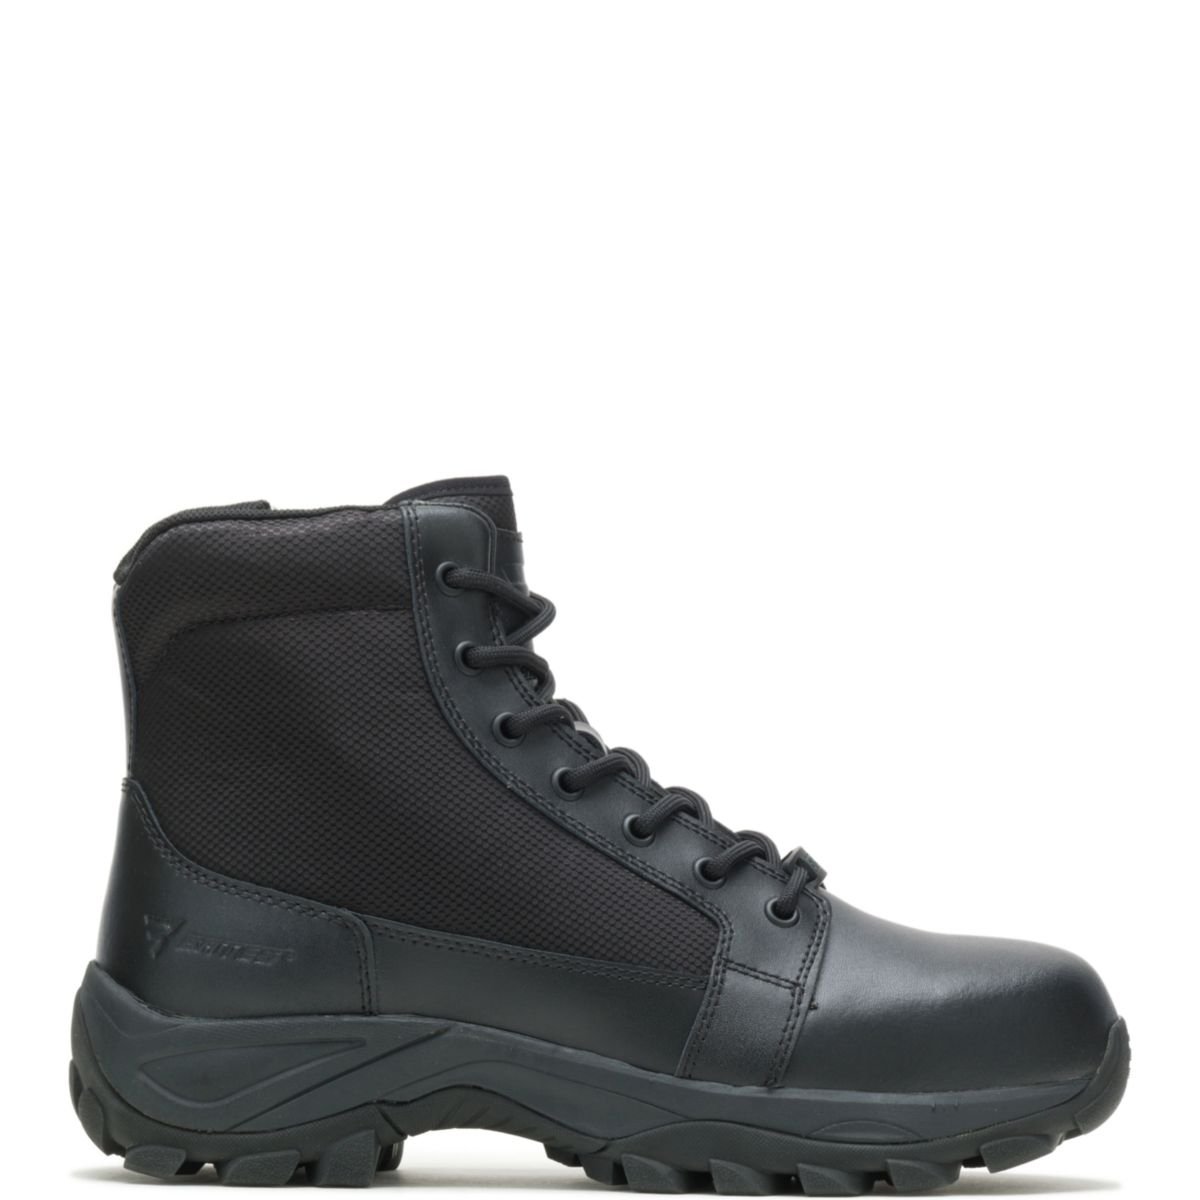 Bates Men's Fuse Zip 6-Inch Side Zip Steel Toe Work Boot Black - E06505 BLACK - BLACK, 11